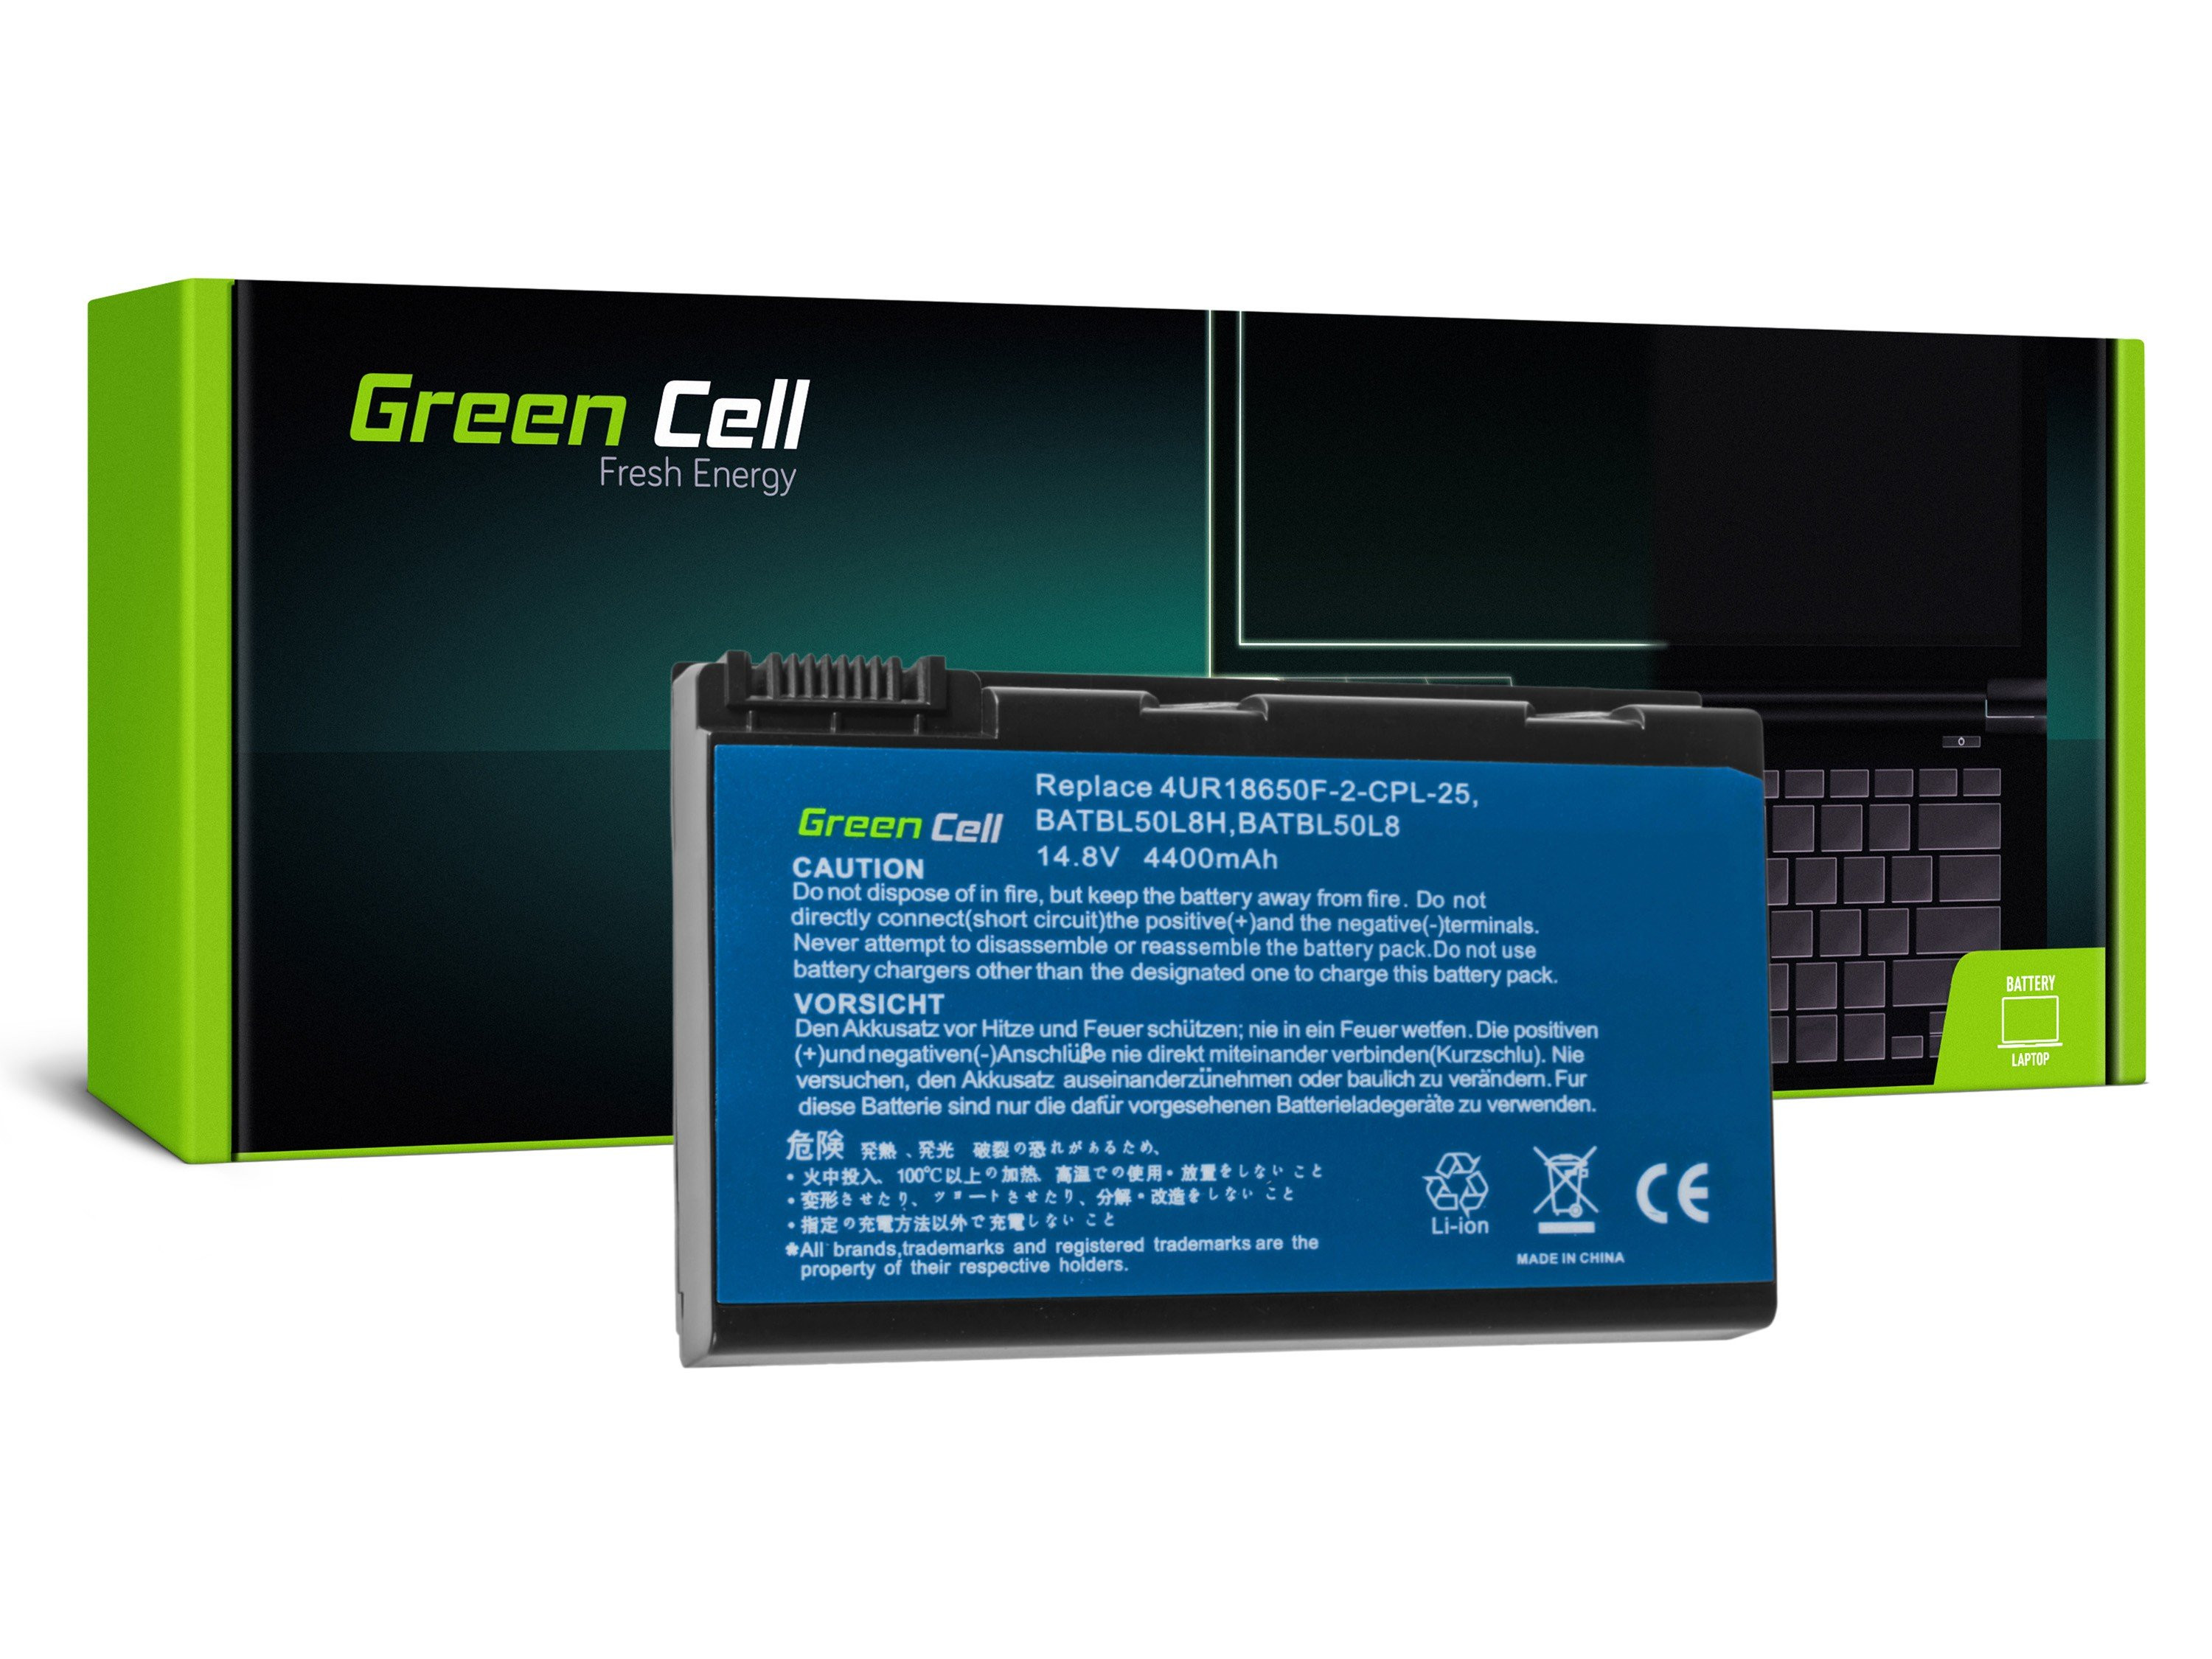 Green Cell AC15 Baterie Acer BATBL50L4 BATBL50L6 BL50, Acer Aspire 3690 5100 5110 5610 5630 TravelMate 4200 II 5210 4400mAh Li-ion